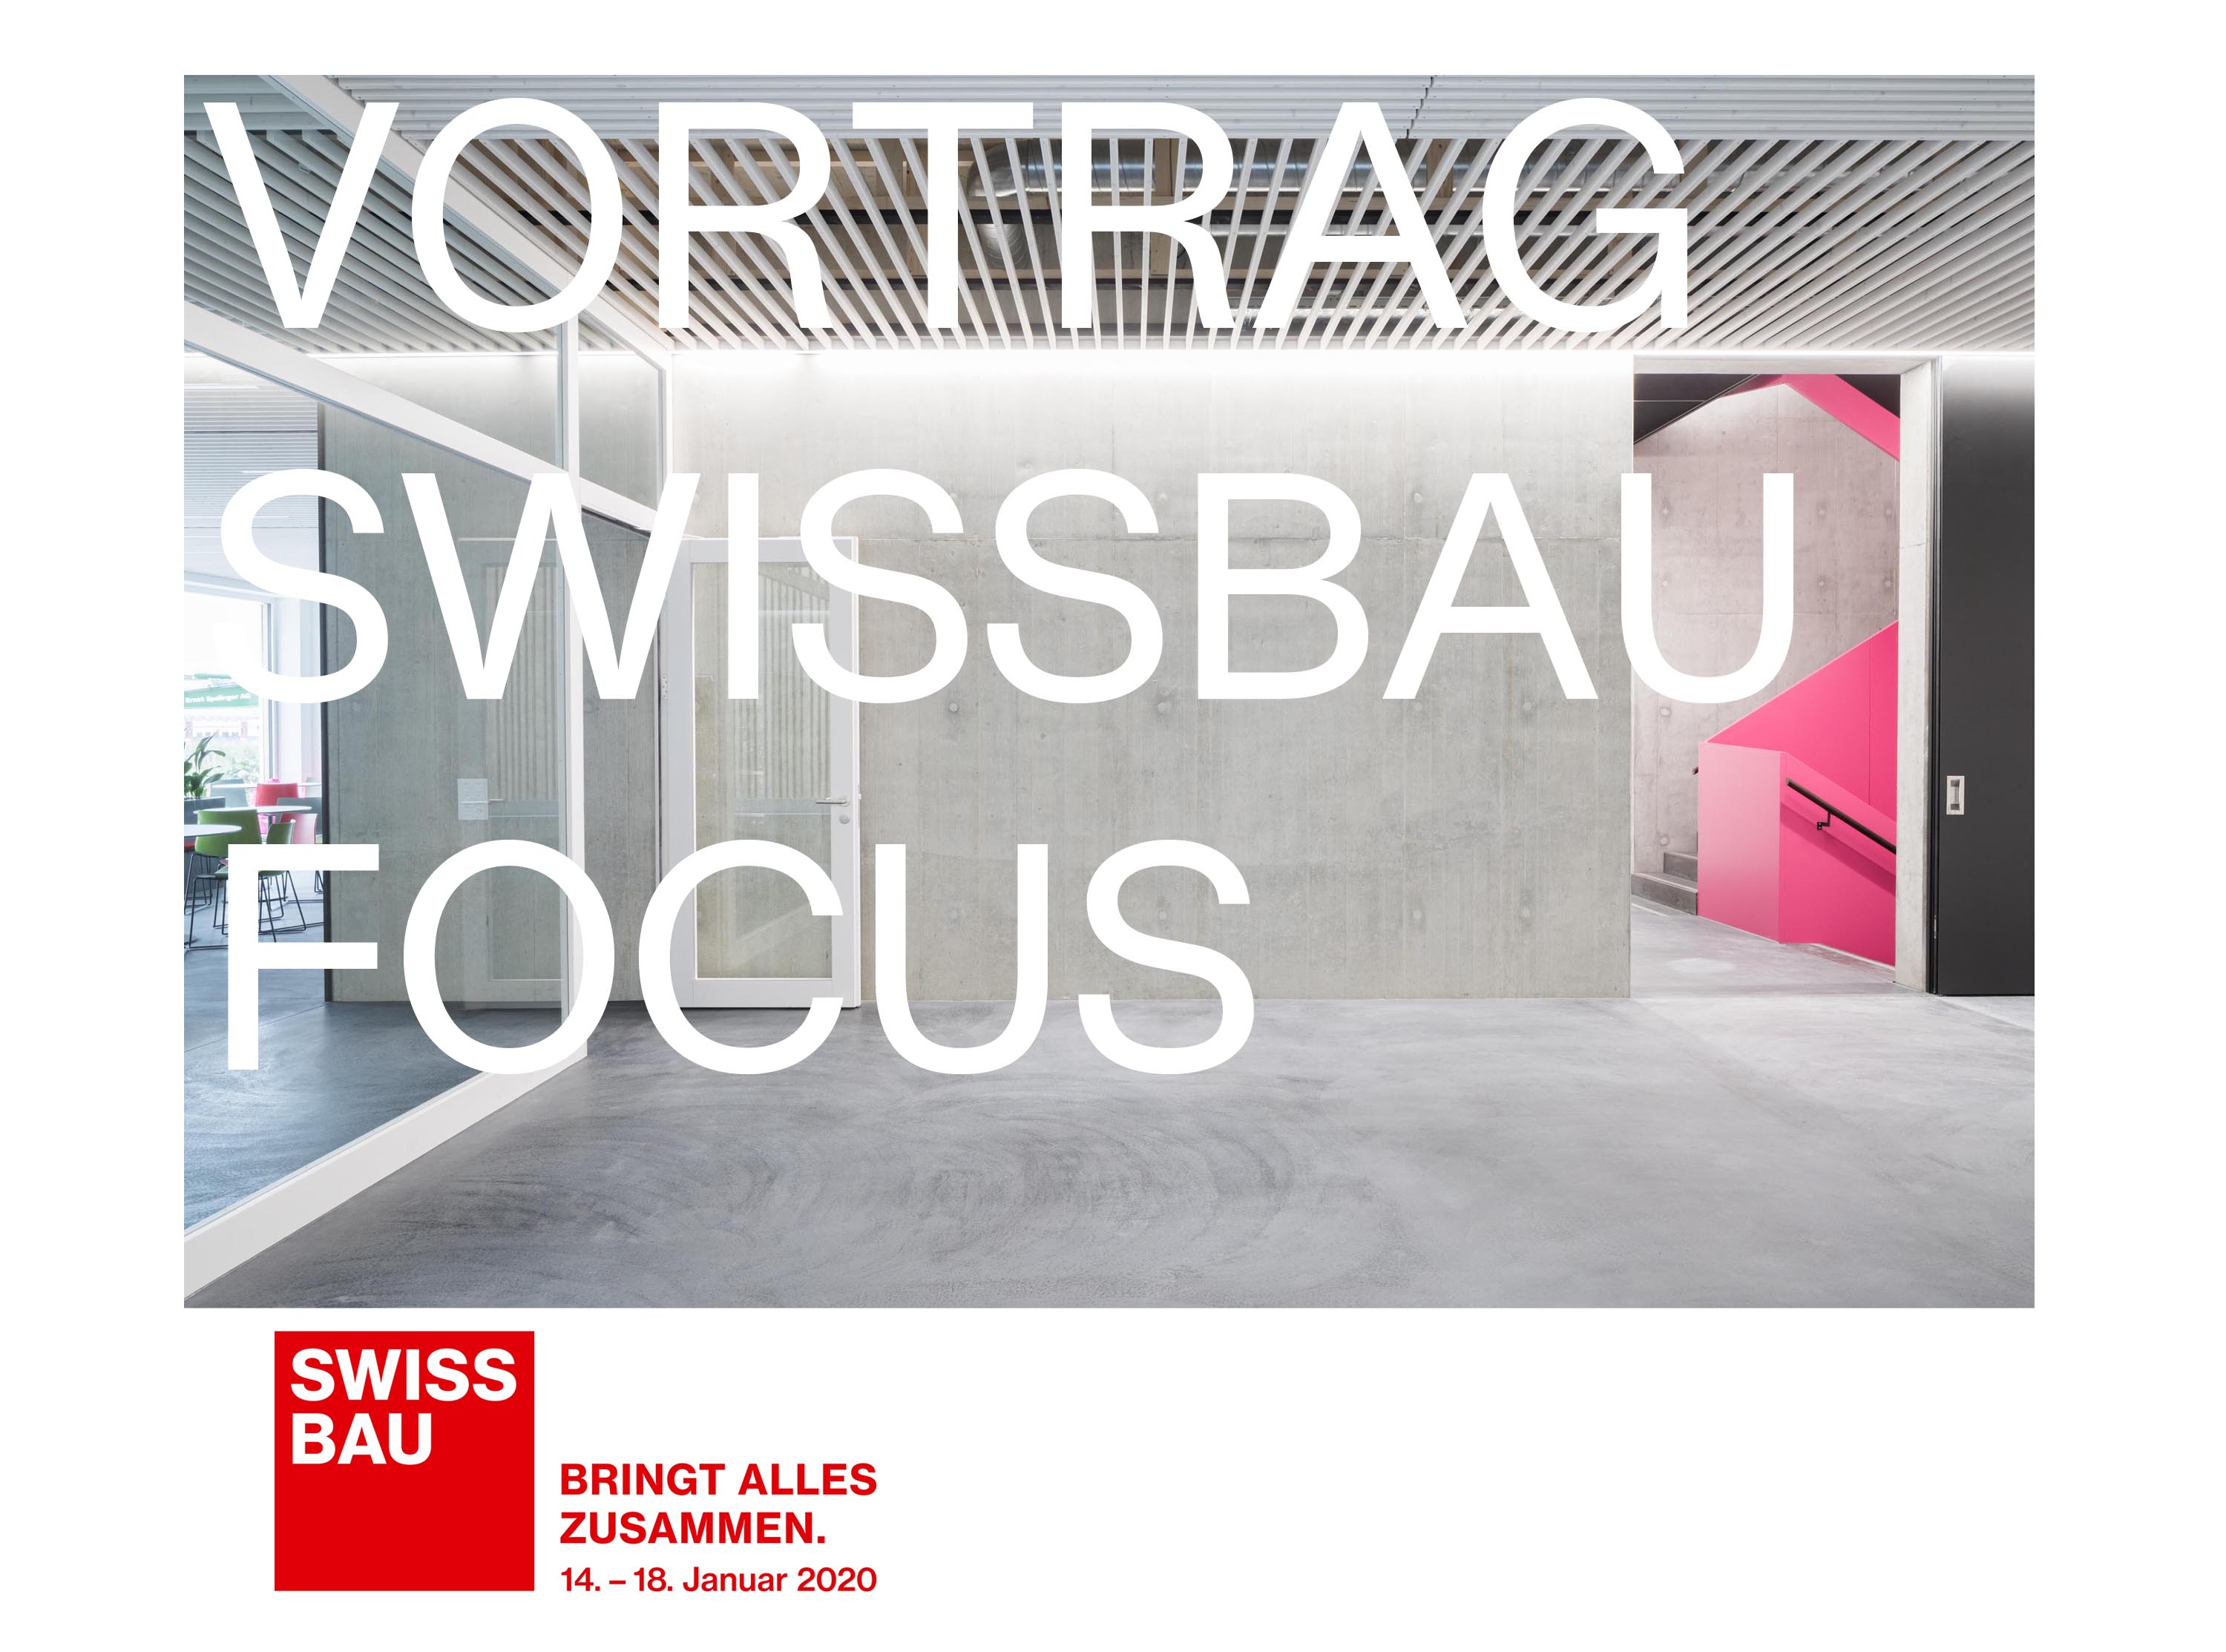 BGP_Swiss_Bau_Fokus_2018_.jpg